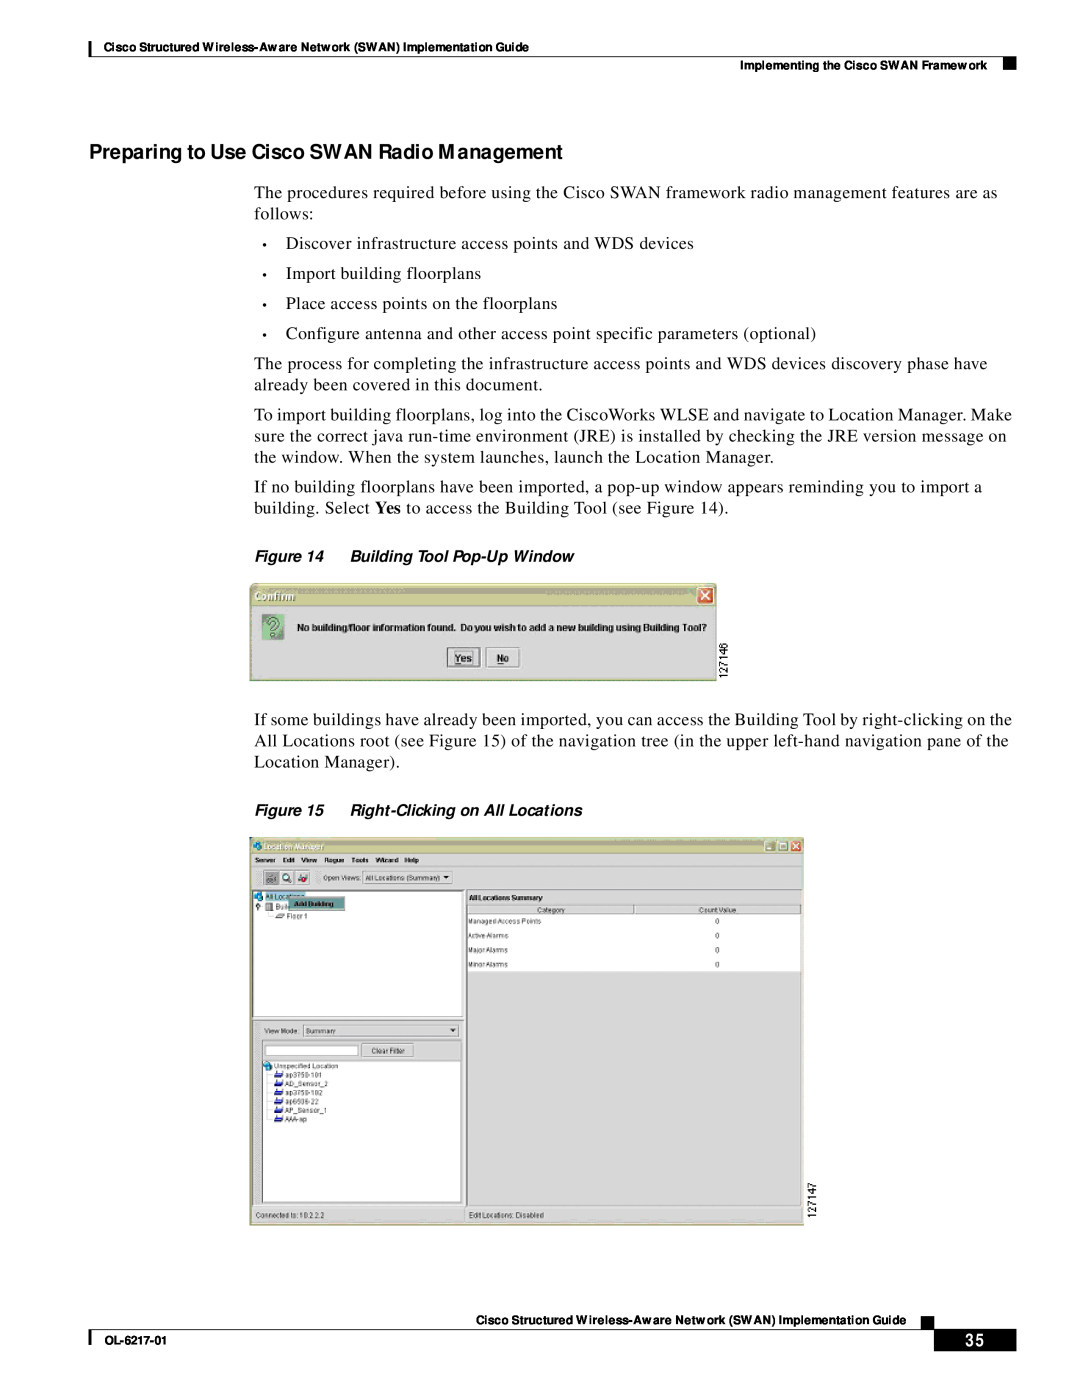 Cisco Systems OL-6217-01 manual Preparing to Use Cisco SWAN Radio Management 